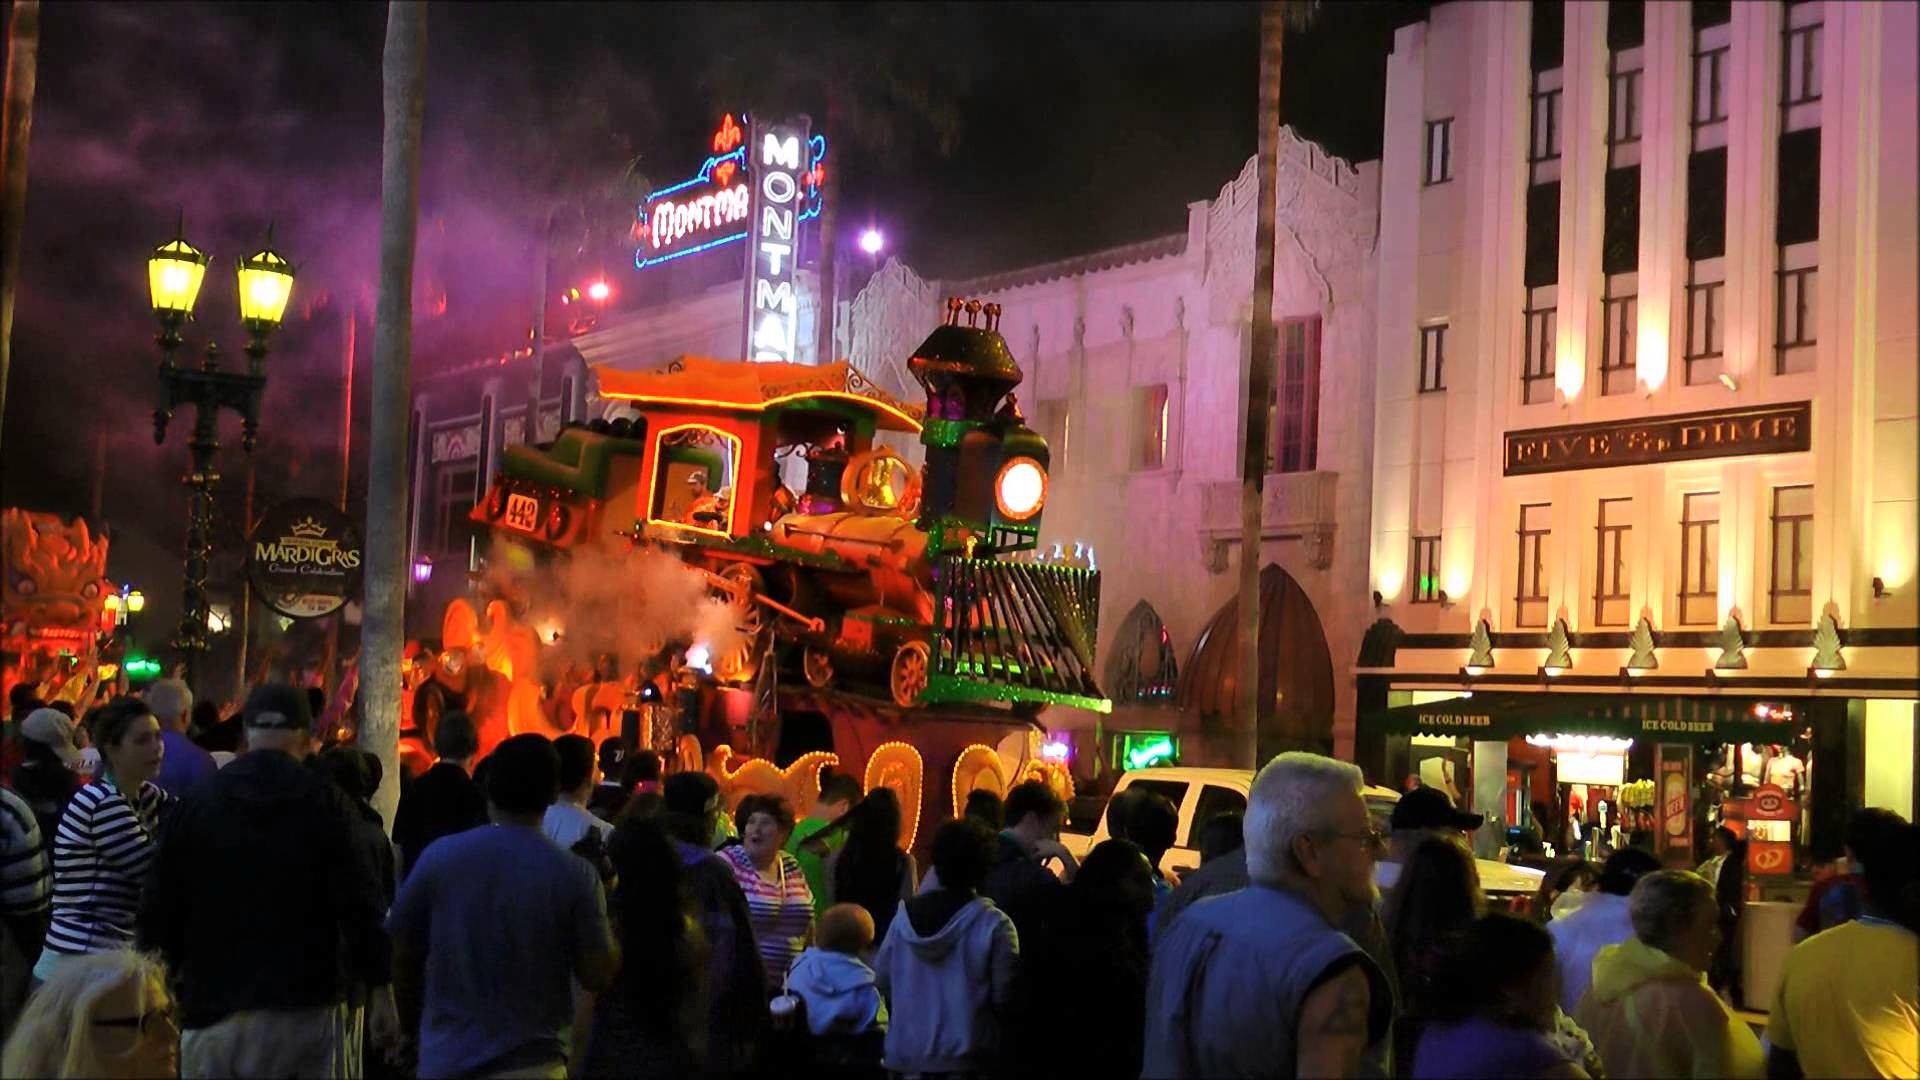 1920x1080 Mardi Gras Parade 2014, Universal Studios Florida, Universal Orlando